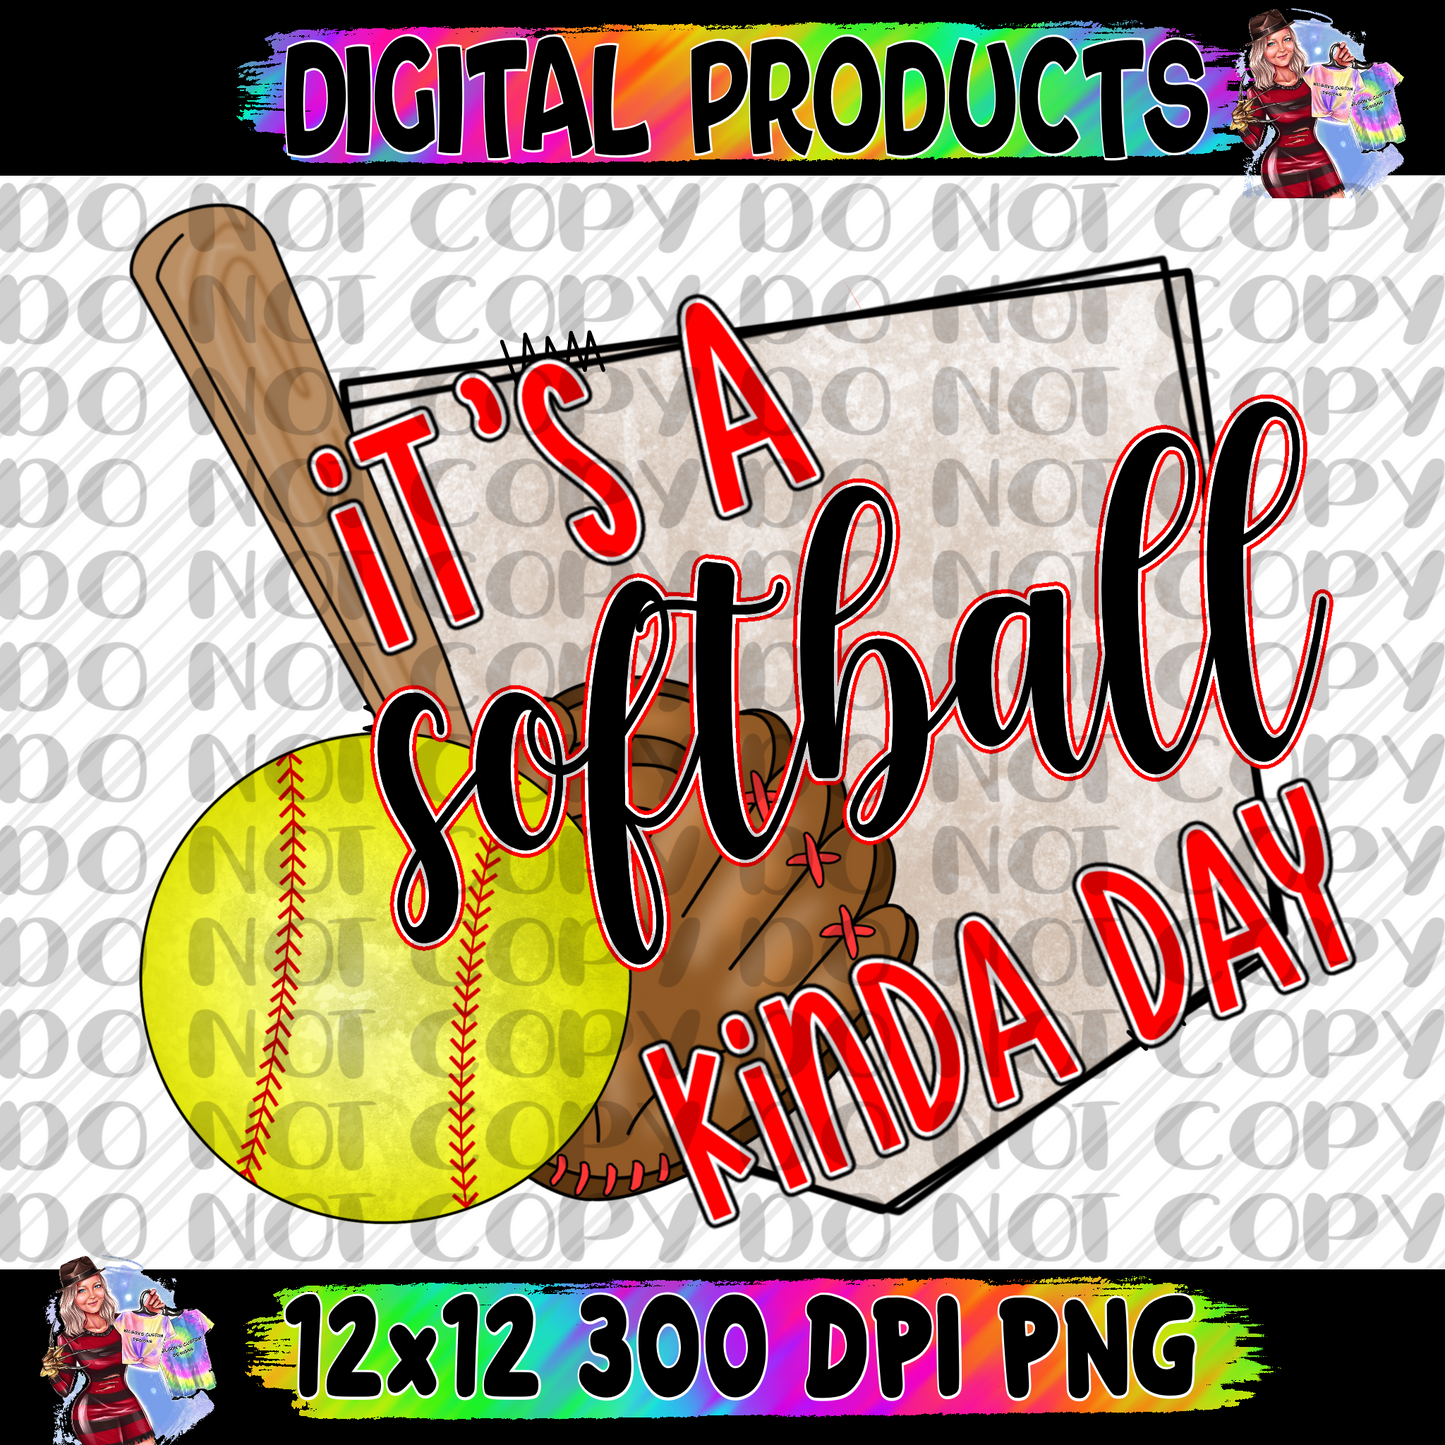 It’s a softball kinda day